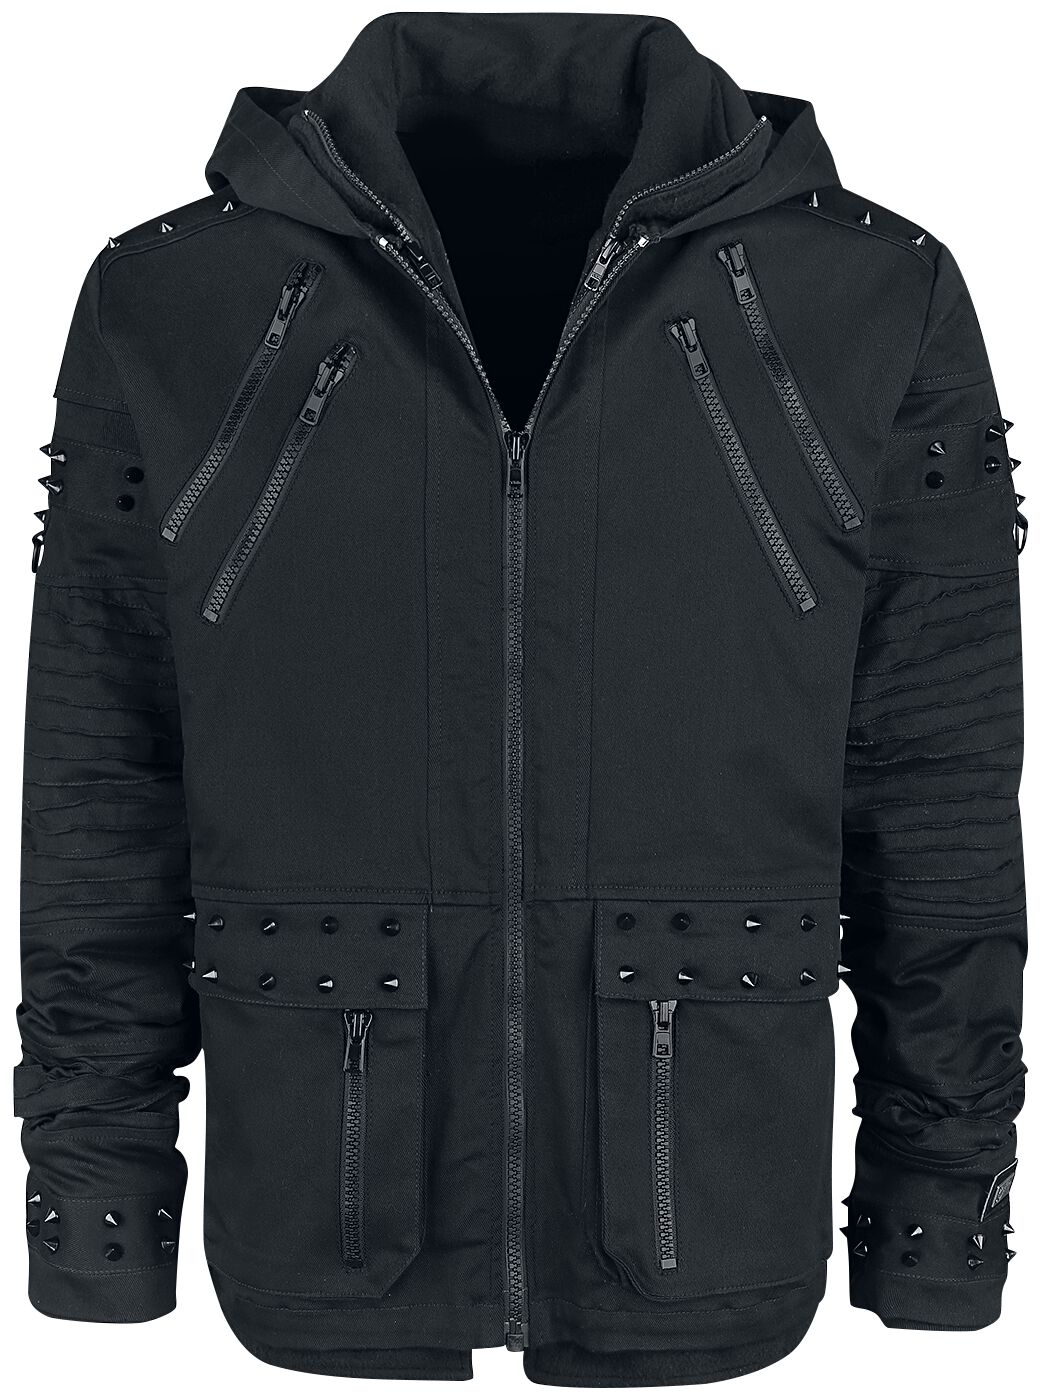 Vixxsin Black Chrome Jacket Winterjacke schwarz in S